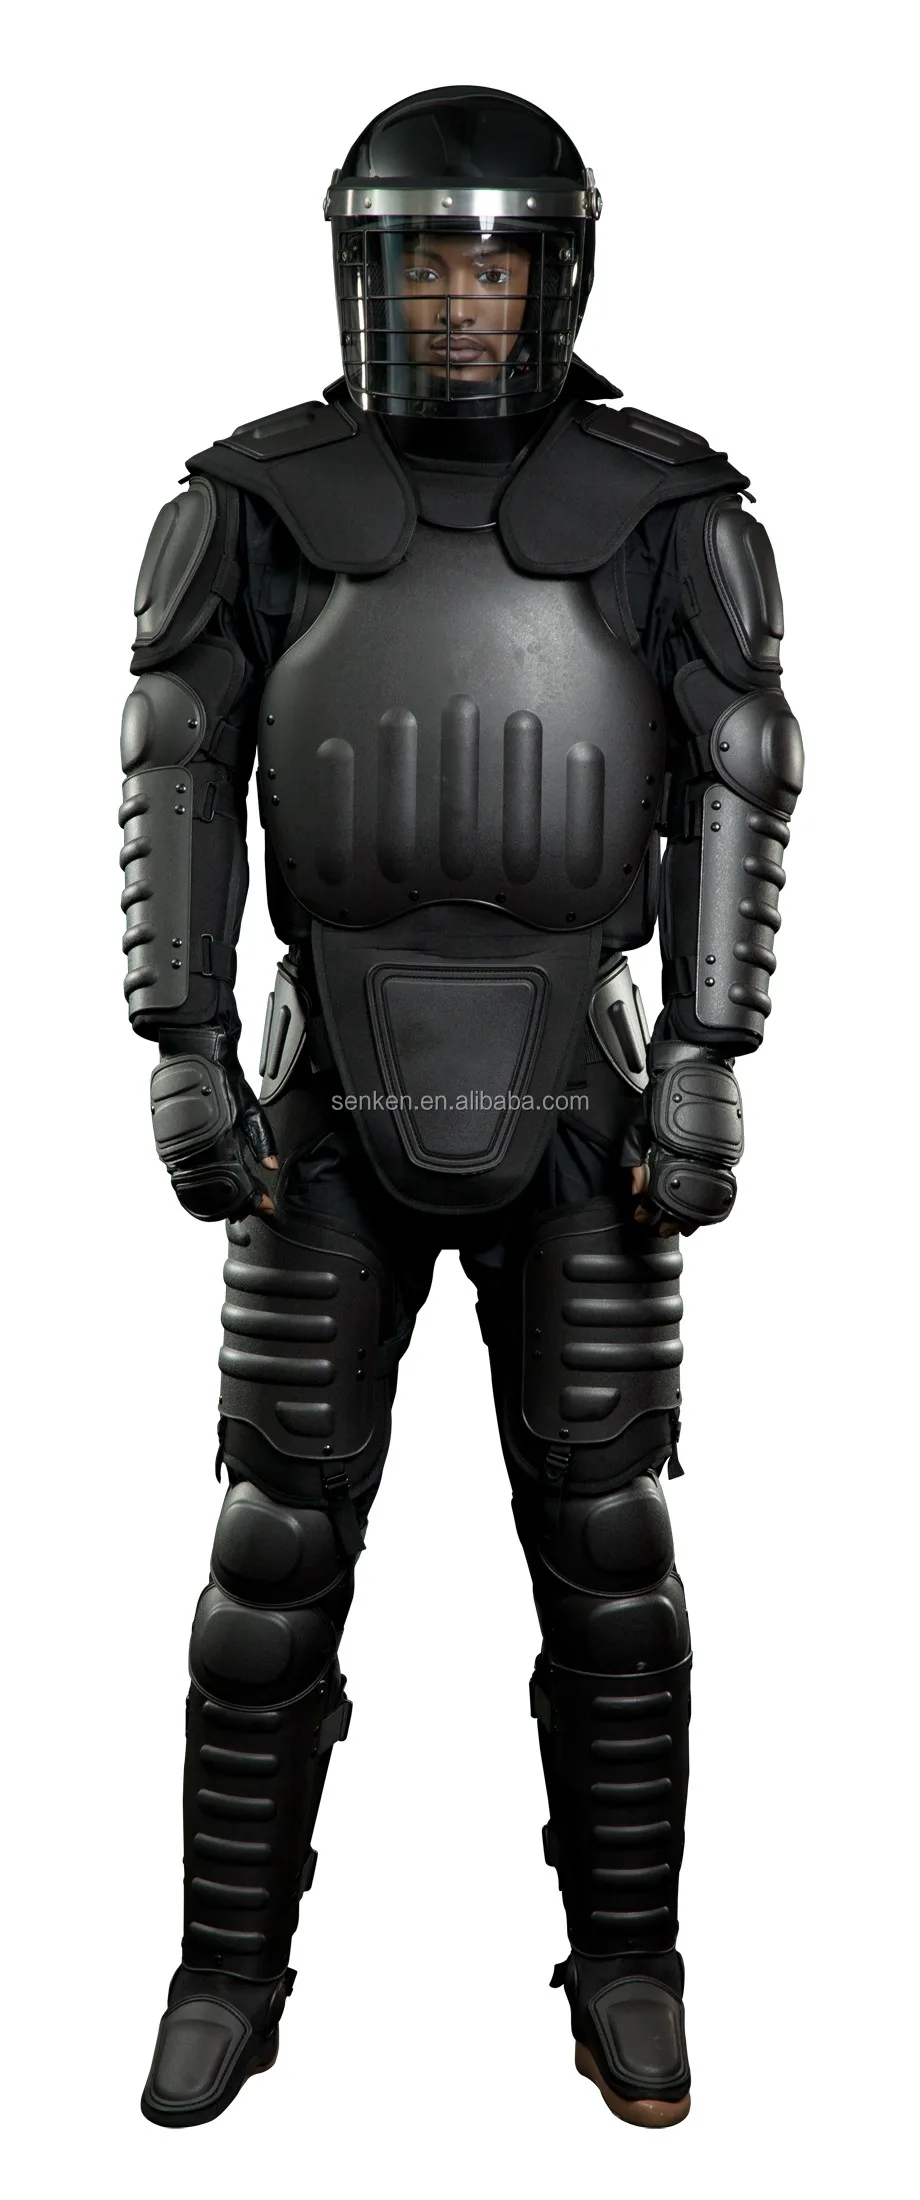 Anti Riot Suit/body Armor/swat Suit - Buy Anti Riot Suit,Riot Suit,Body ...